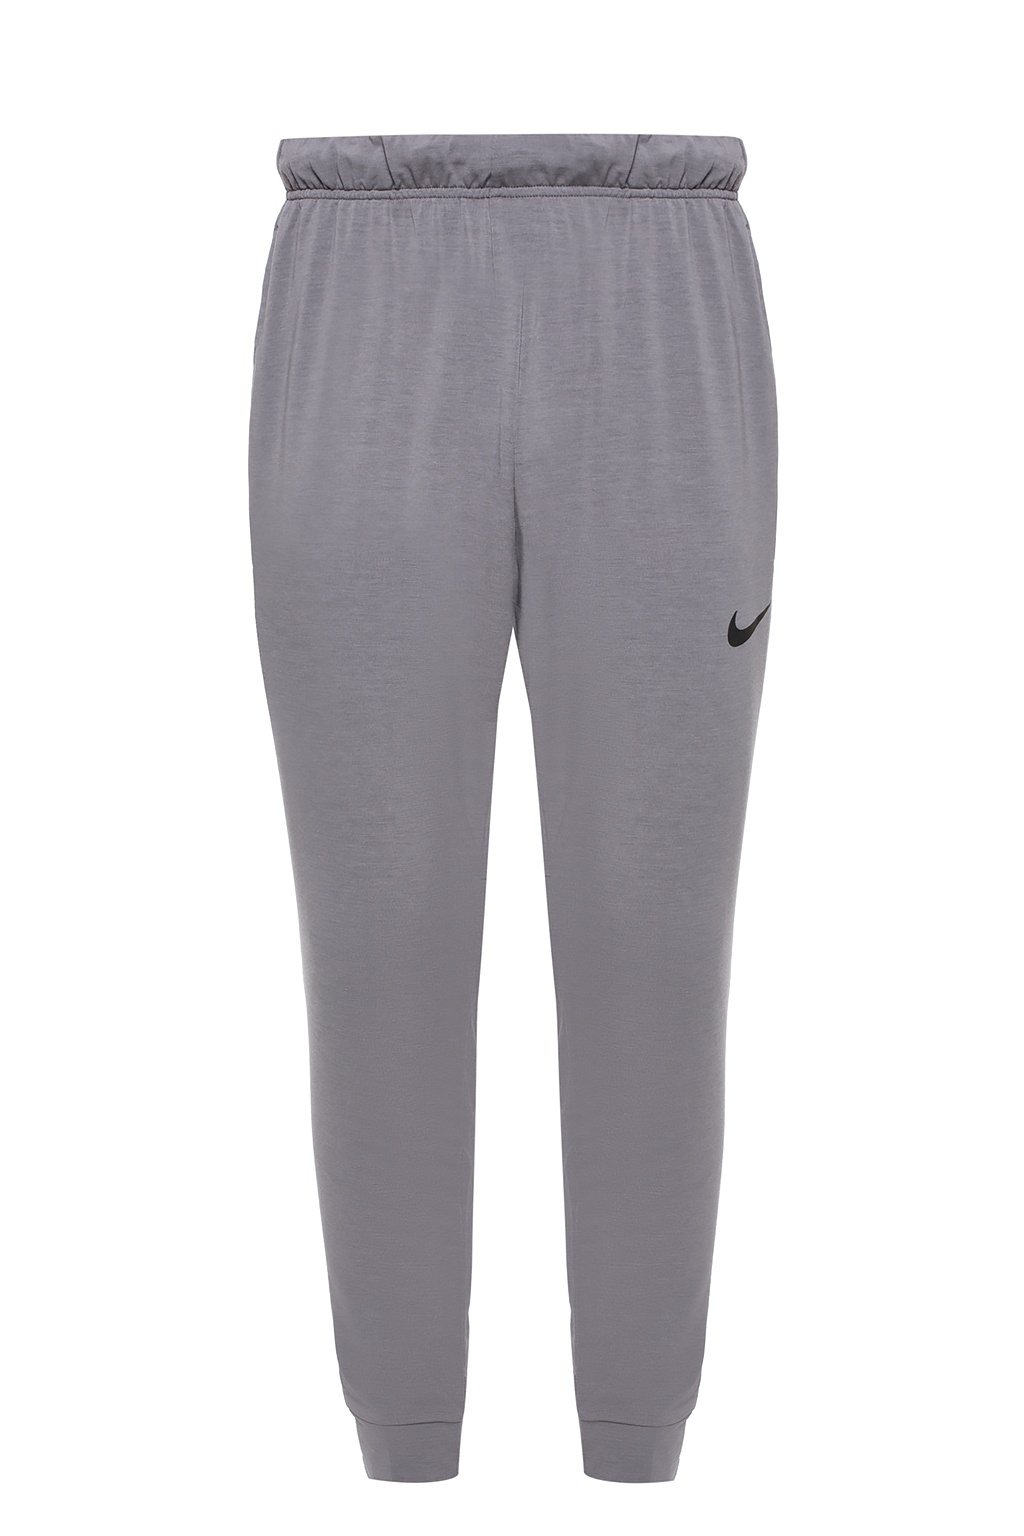 Sweatpants with logo Nike - Vitkac Germany